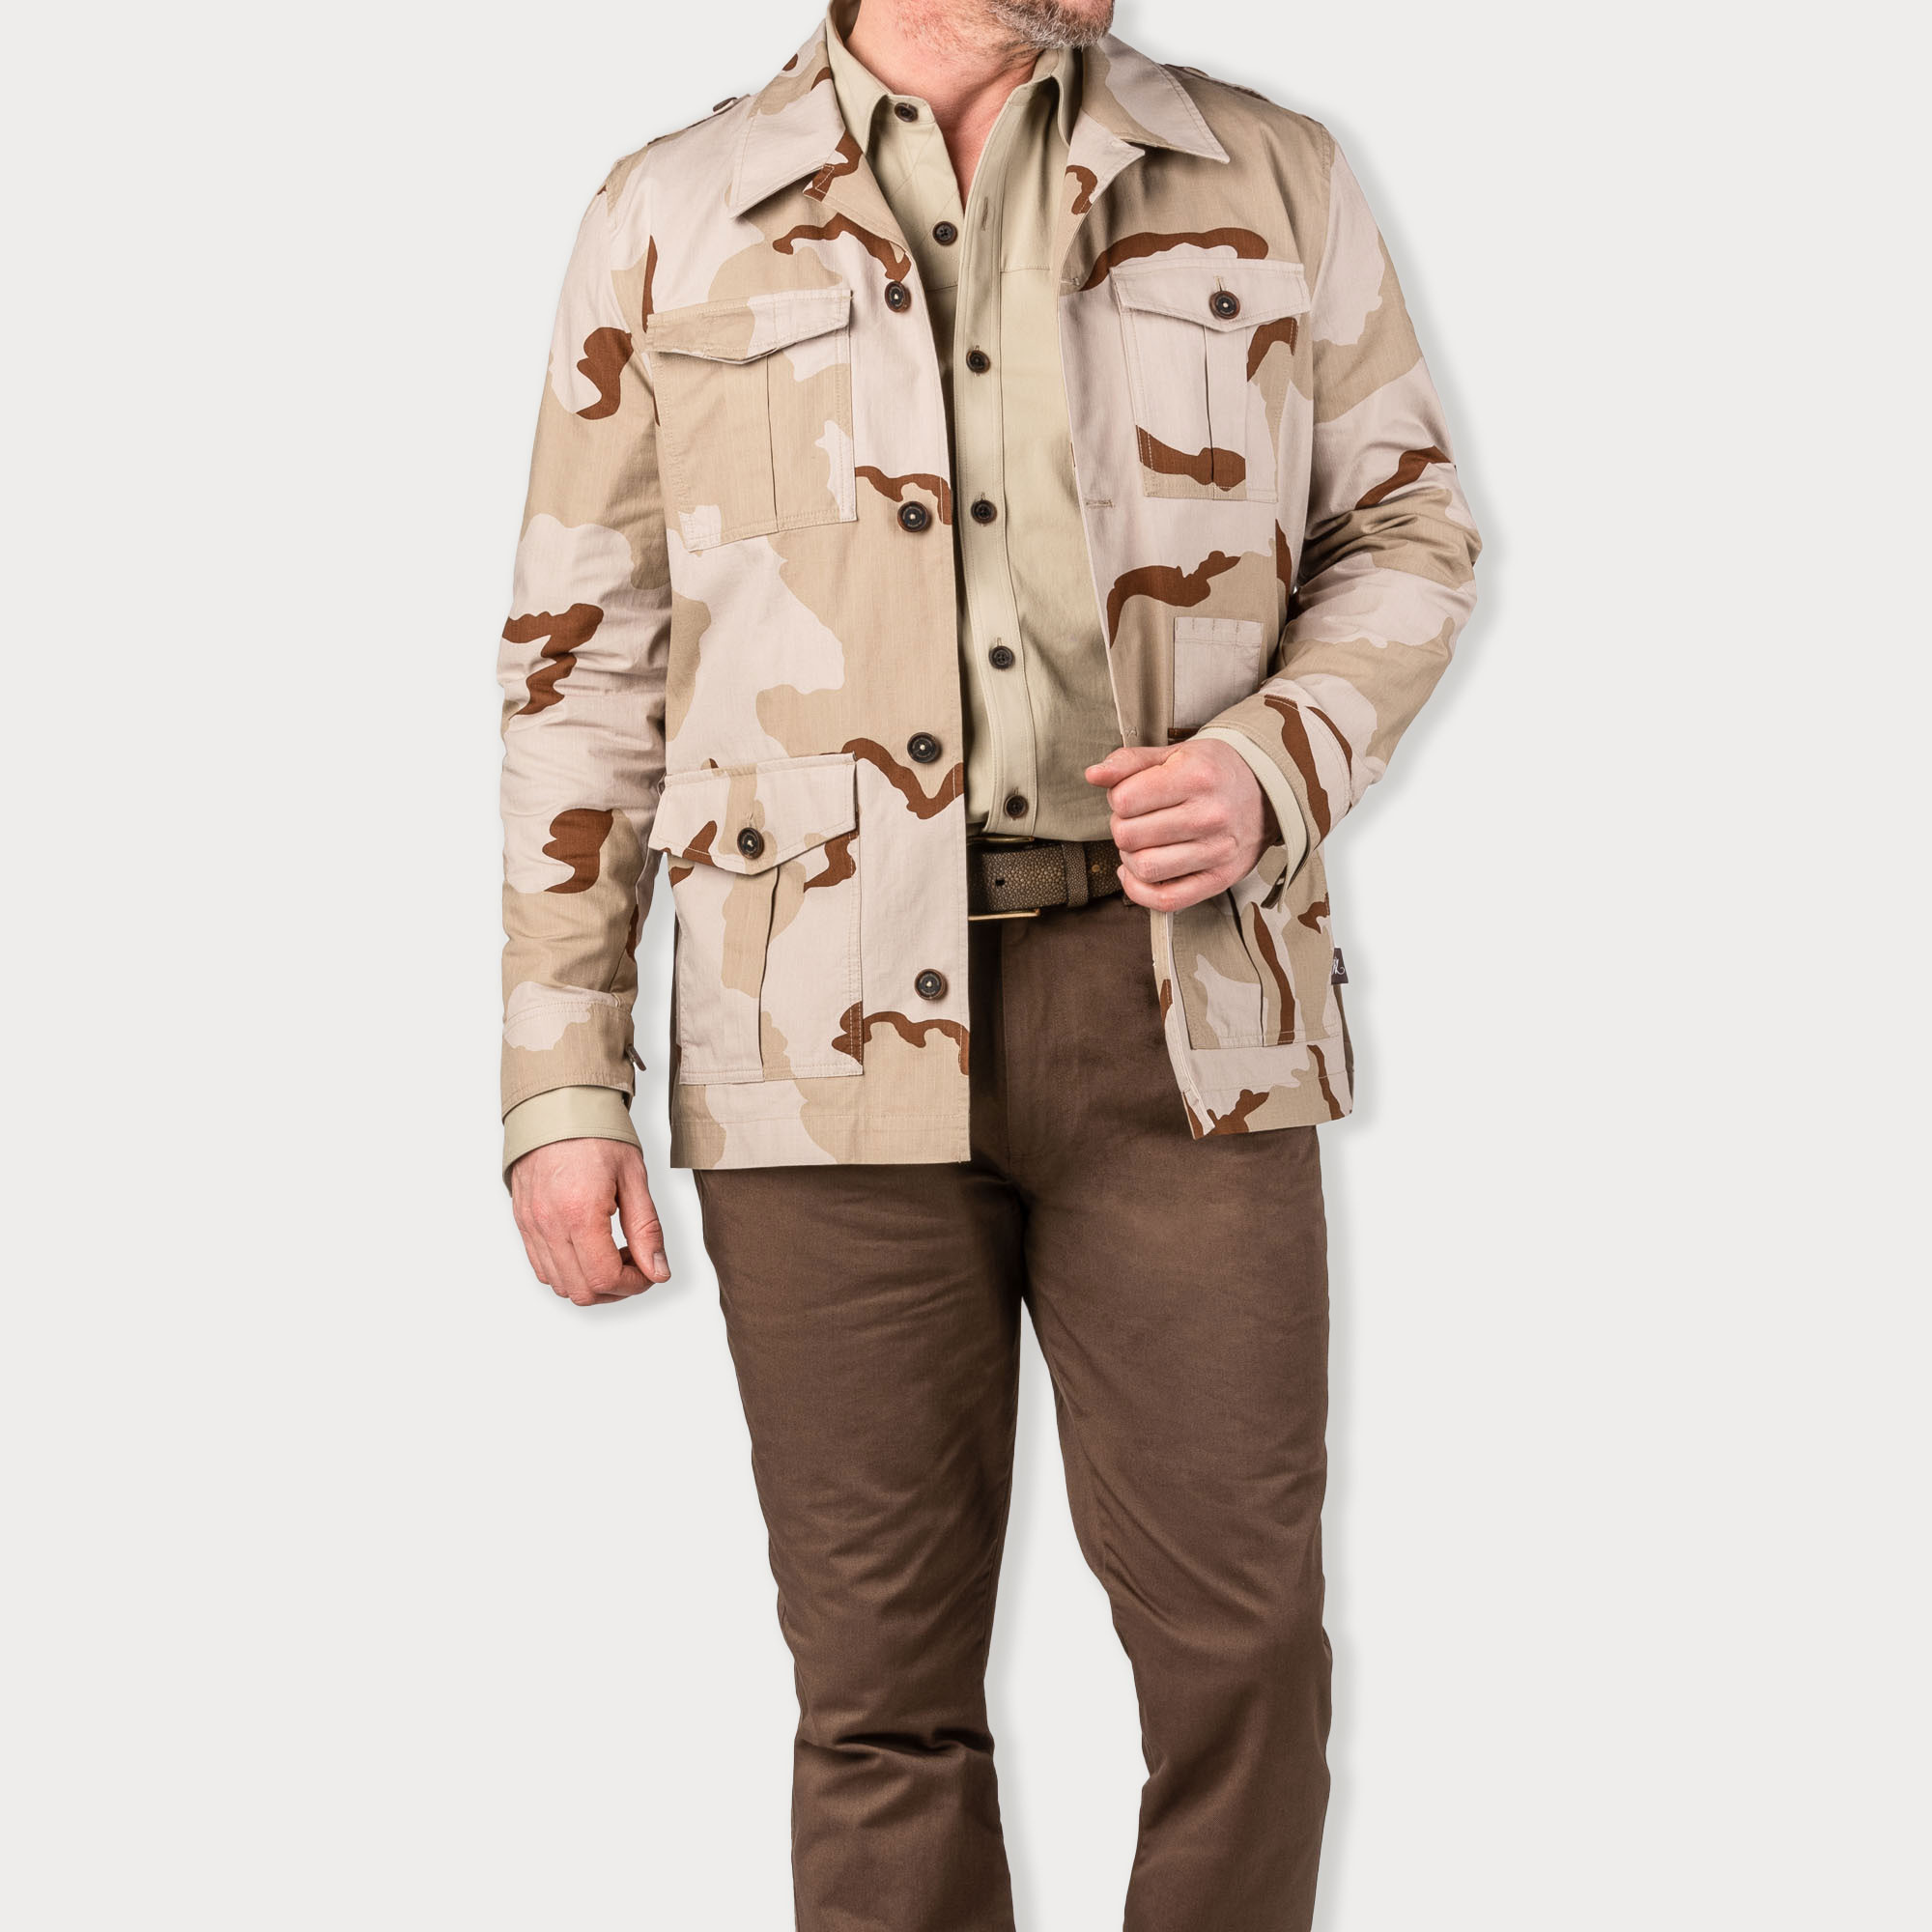 Westley Richards Safari Travel Jacket in Desert Camouflage